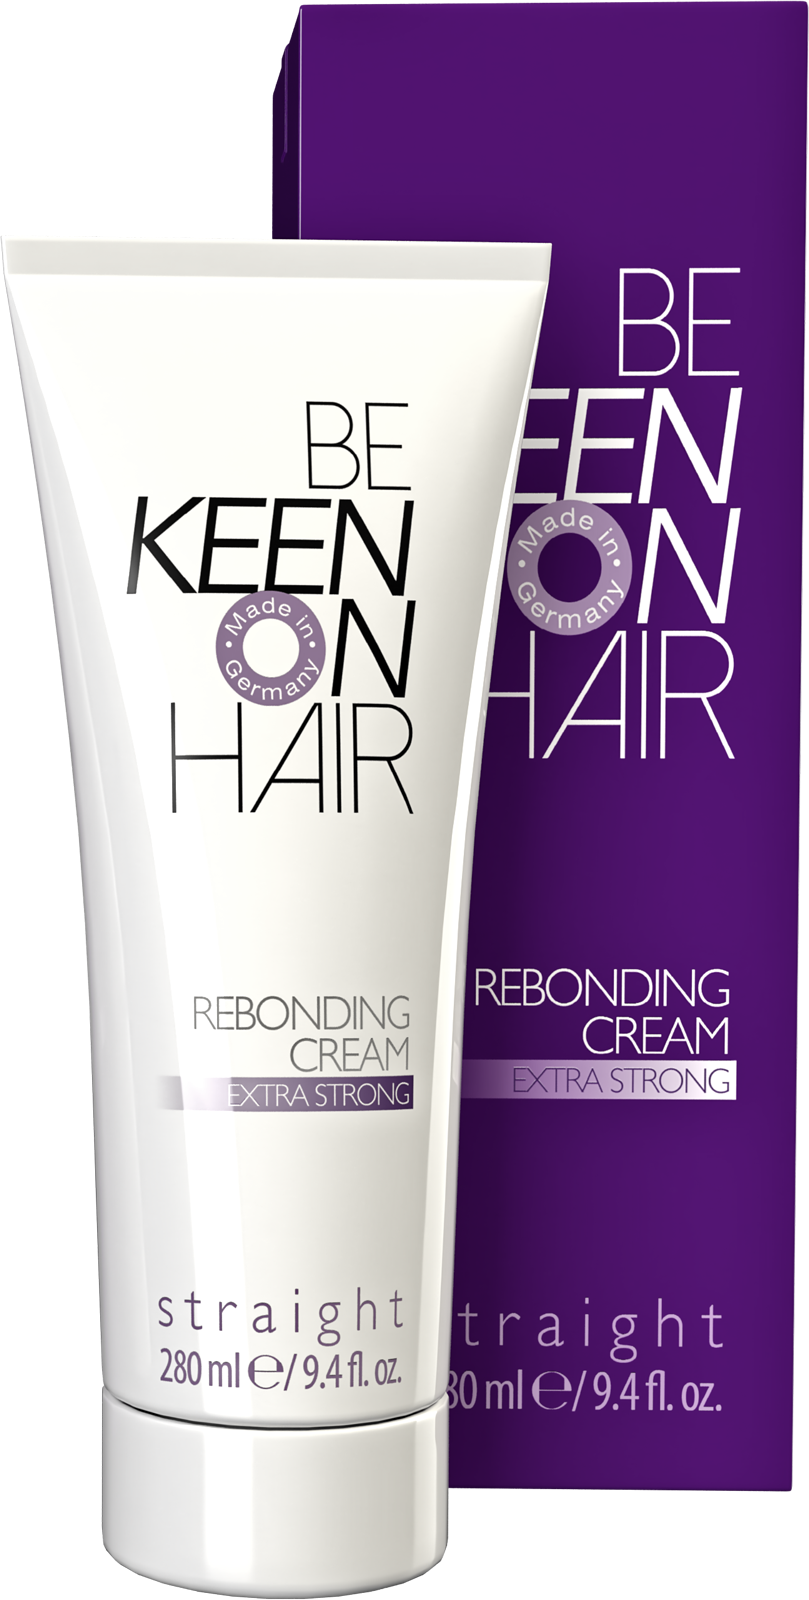 Keen rebonding cream extra strong крем для выпрямления волос 280 мл БС